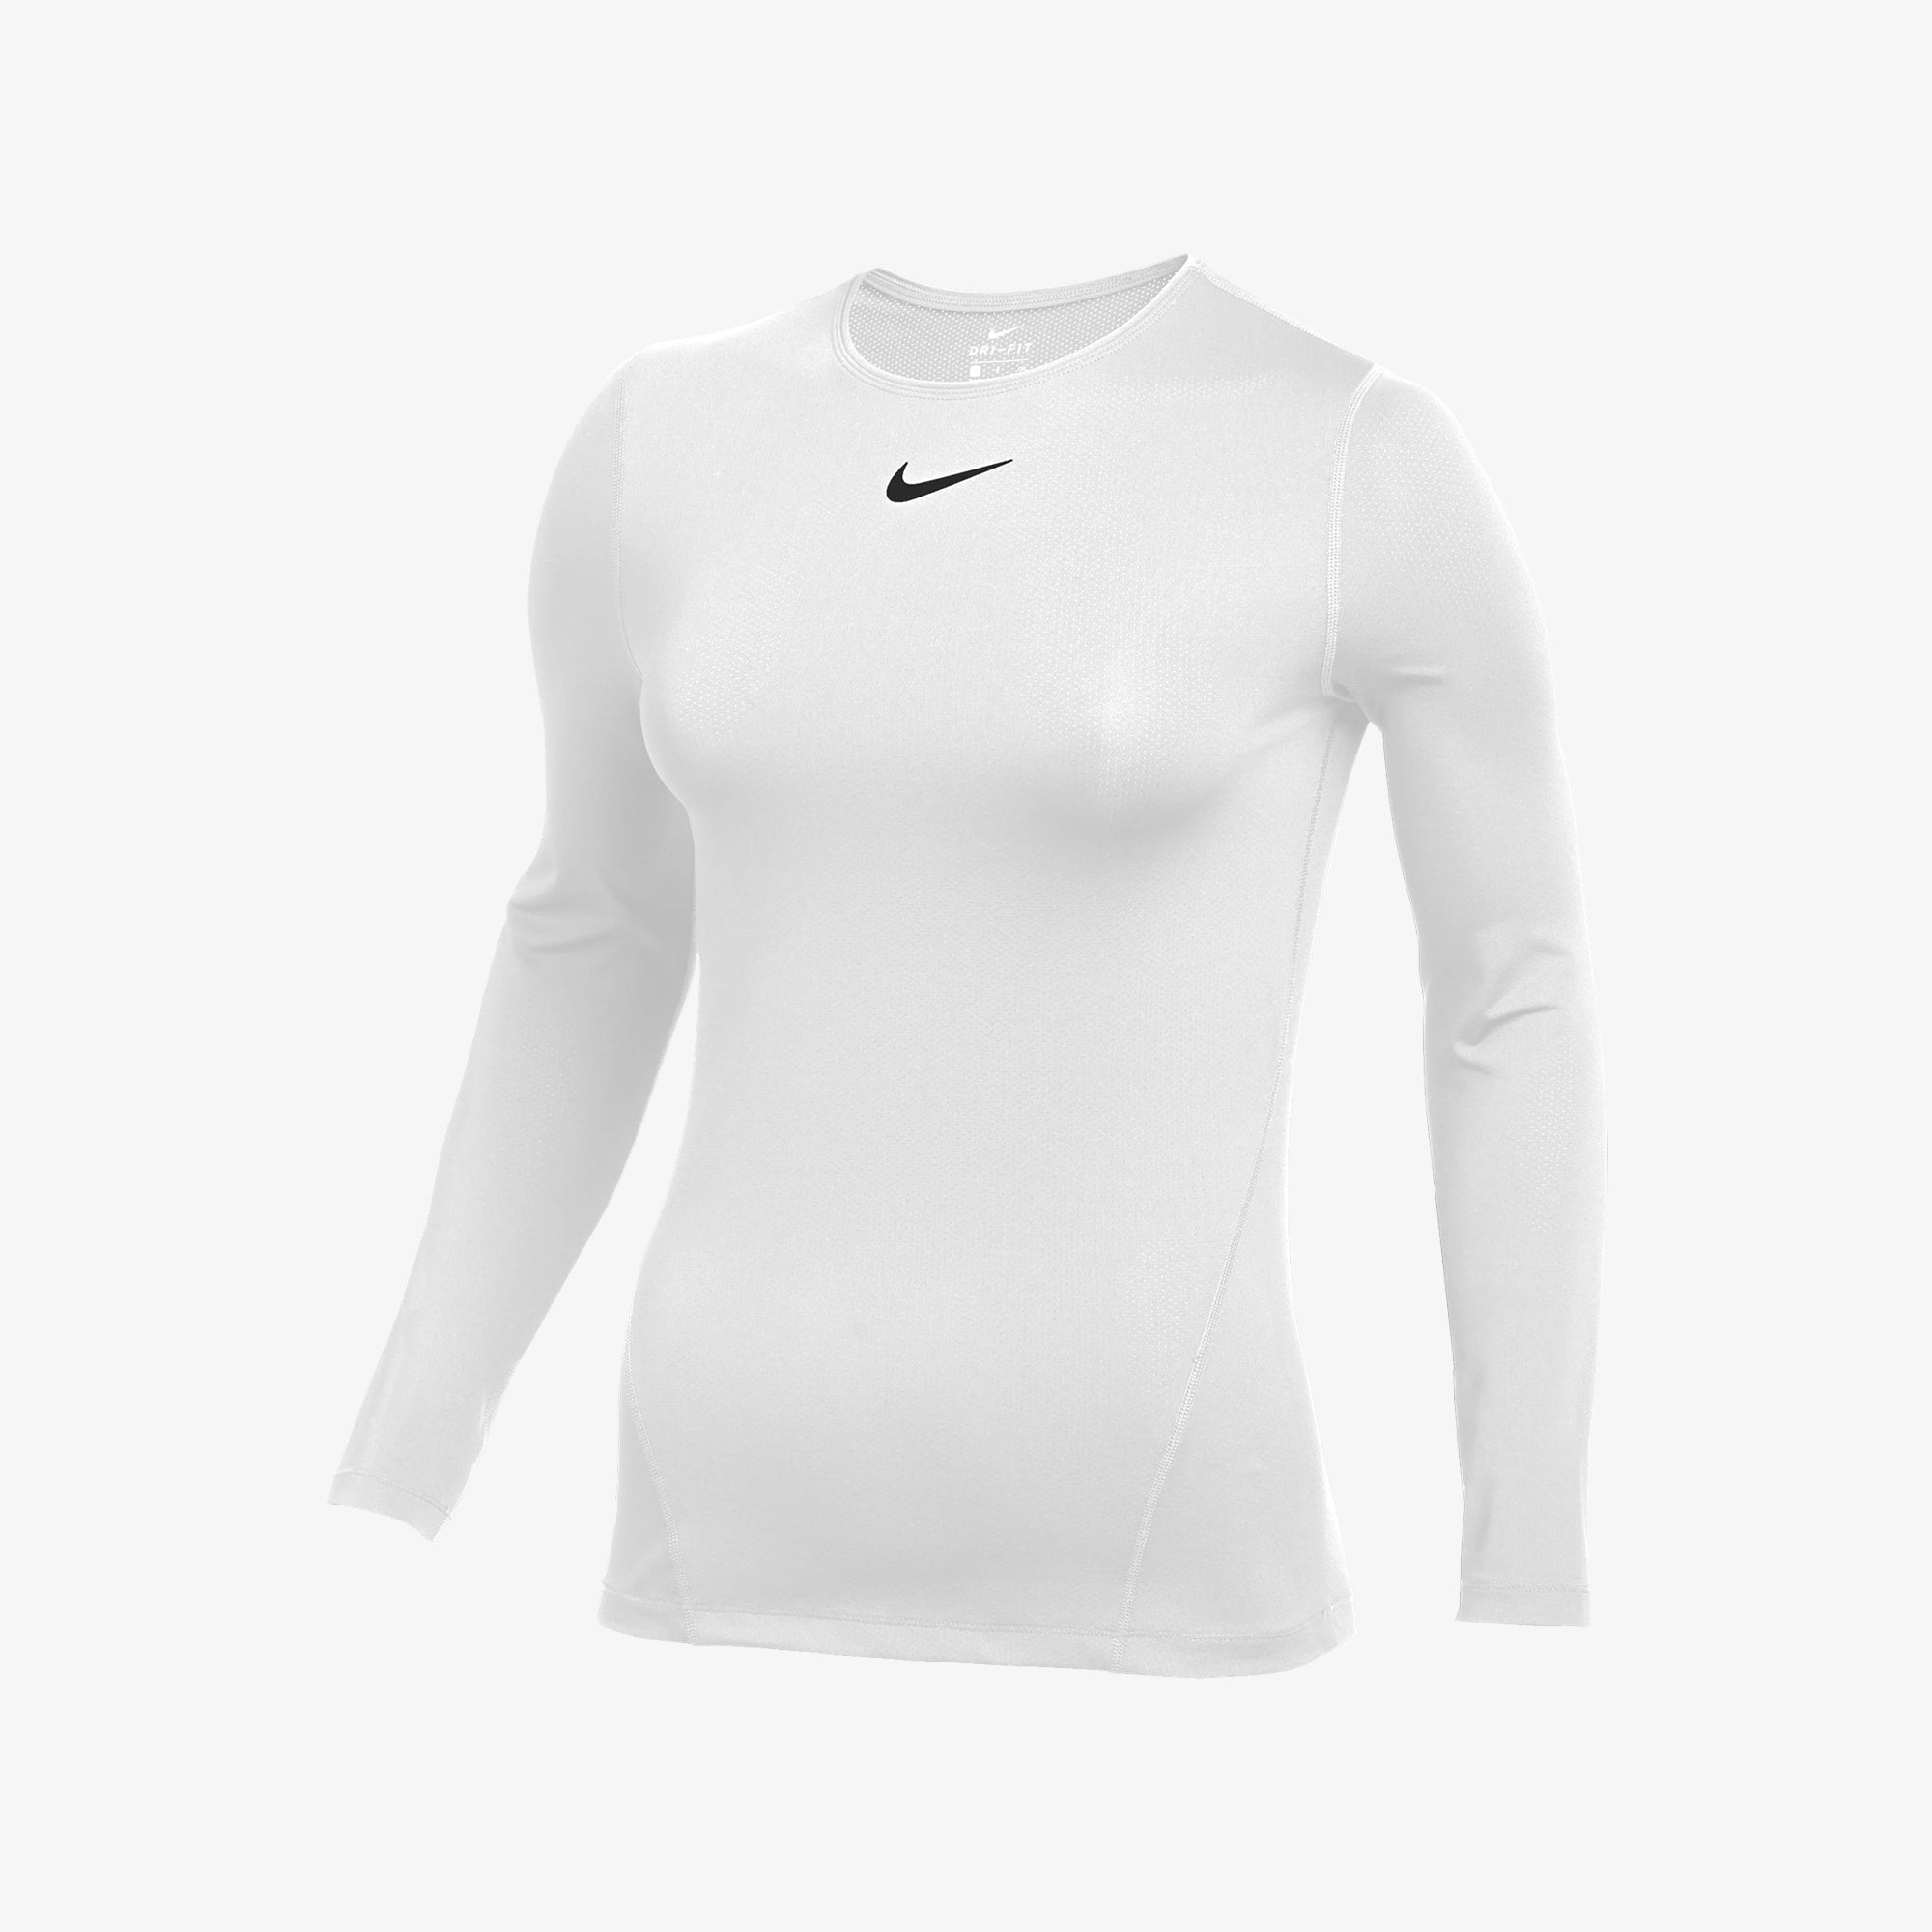 kunstmest pk nakoming Nike Pro Women's Long-Sleeve Top